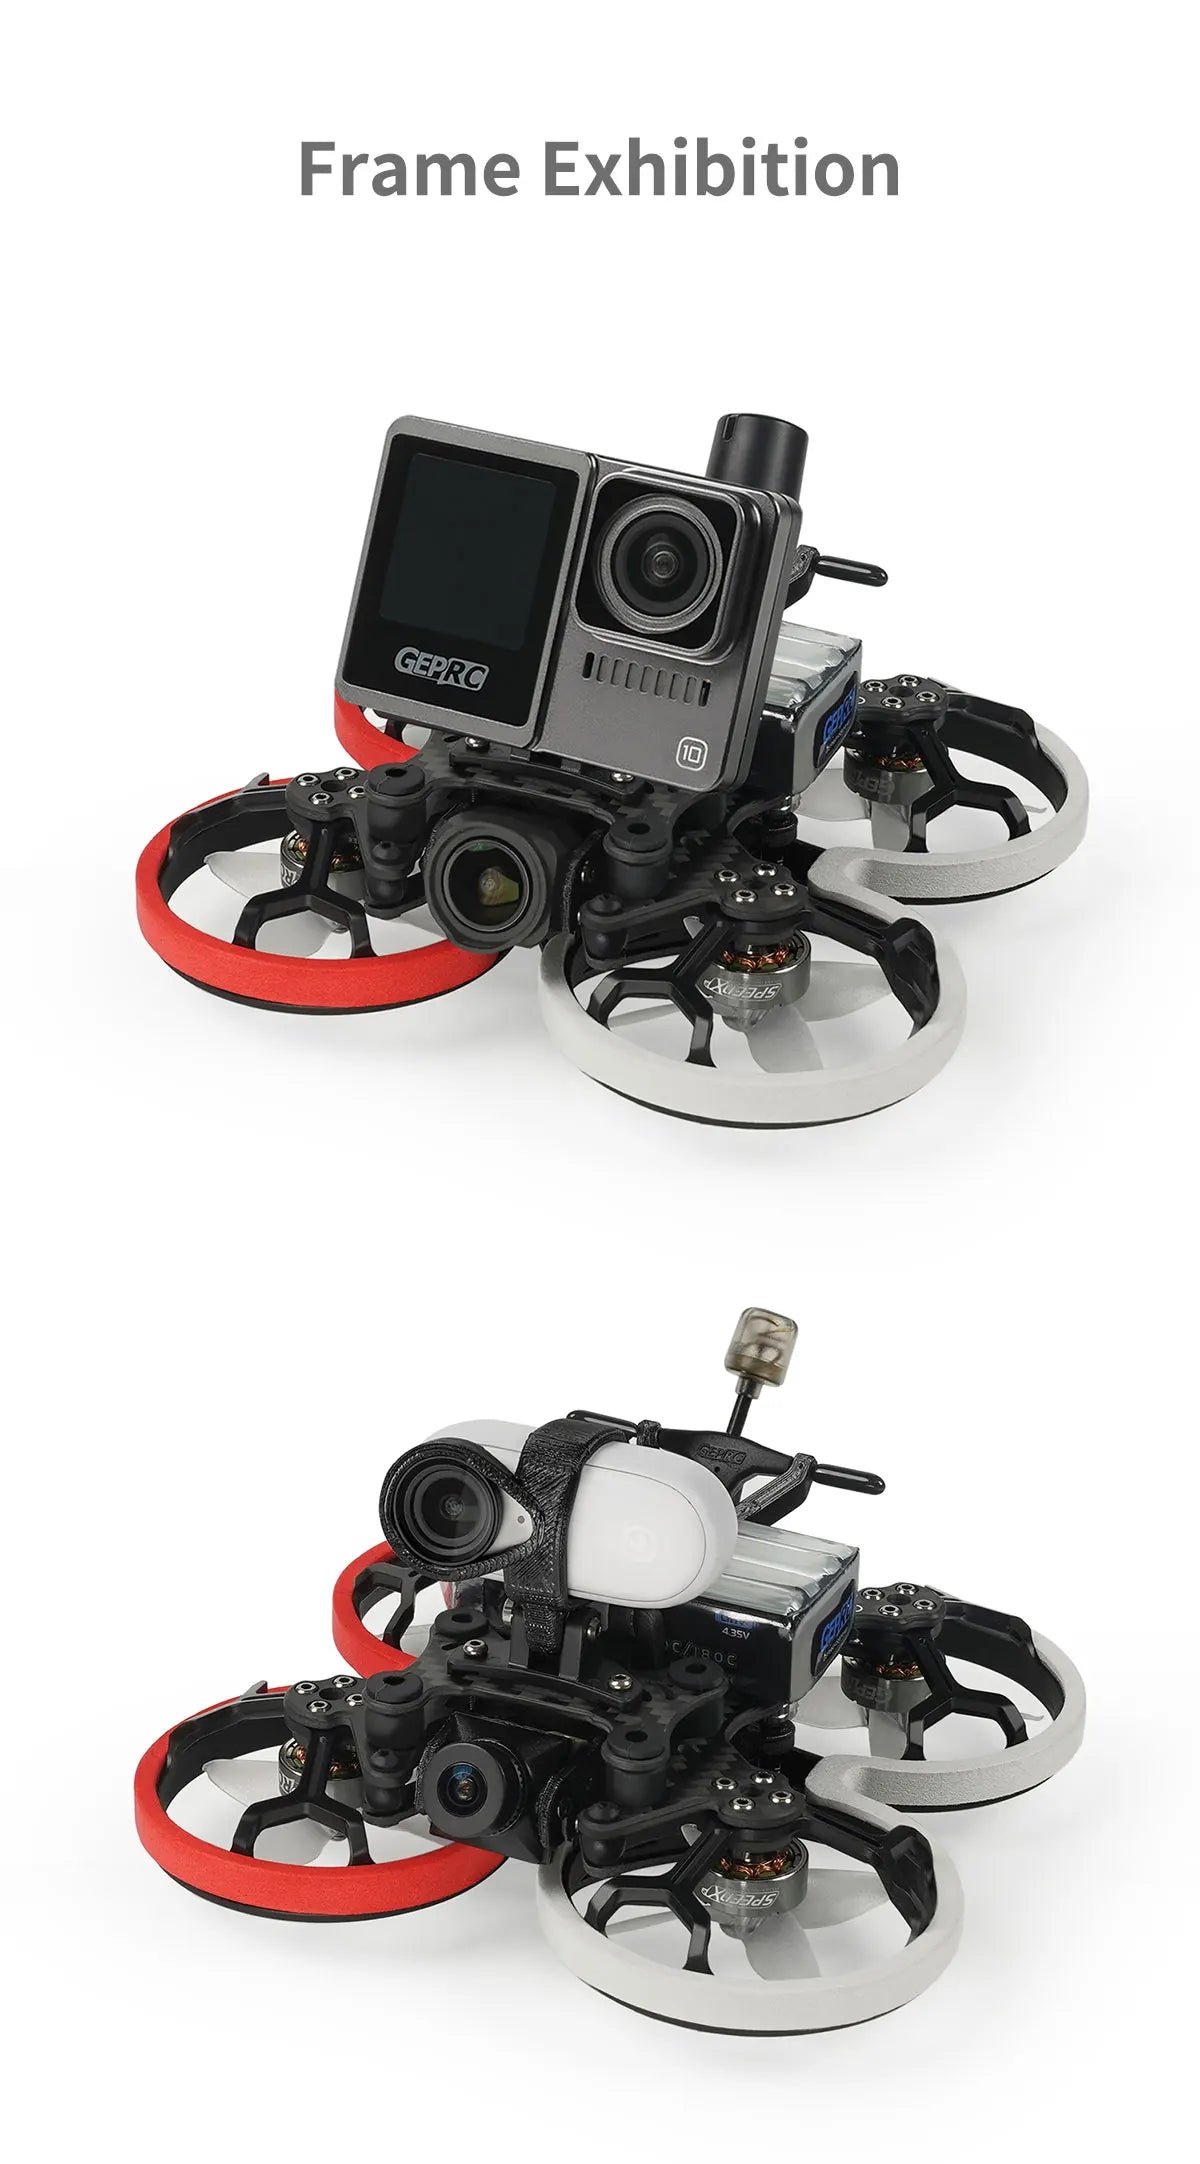 GEPRC Cinelog20 HD Wasp FPV Drone, Frame Exhibition 435v '0 € GEPRO '